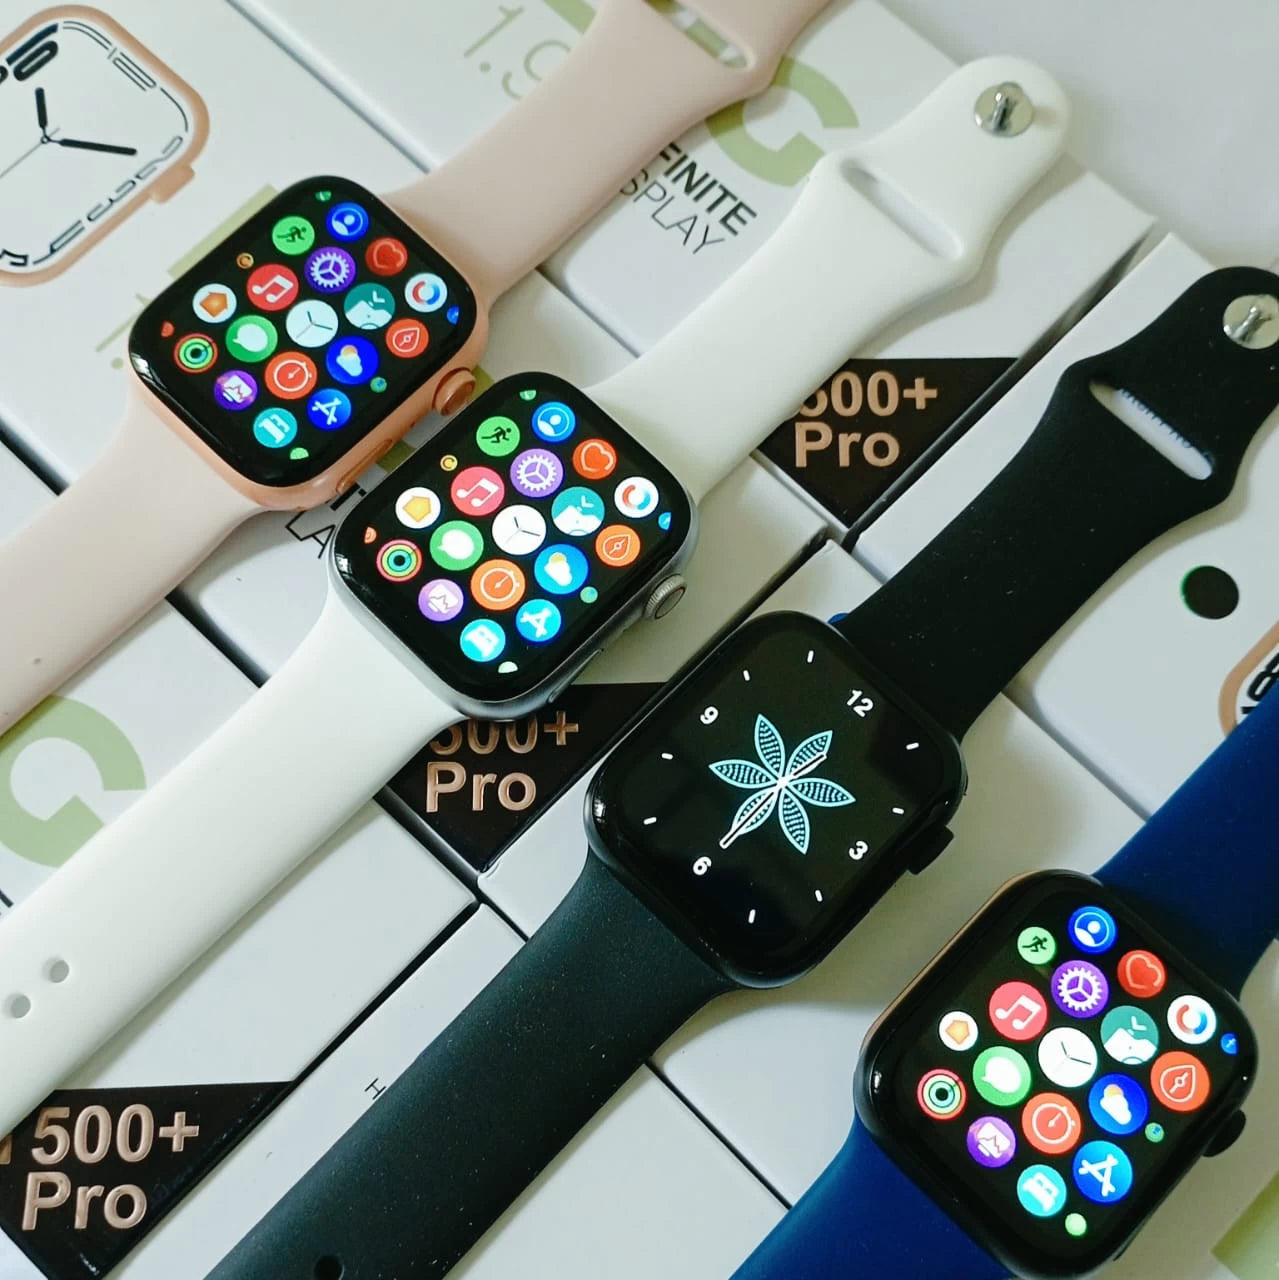 Newest T500 + pro Smart Watc, Hiwatch PRO APP T500 plus Pro Smartwatch